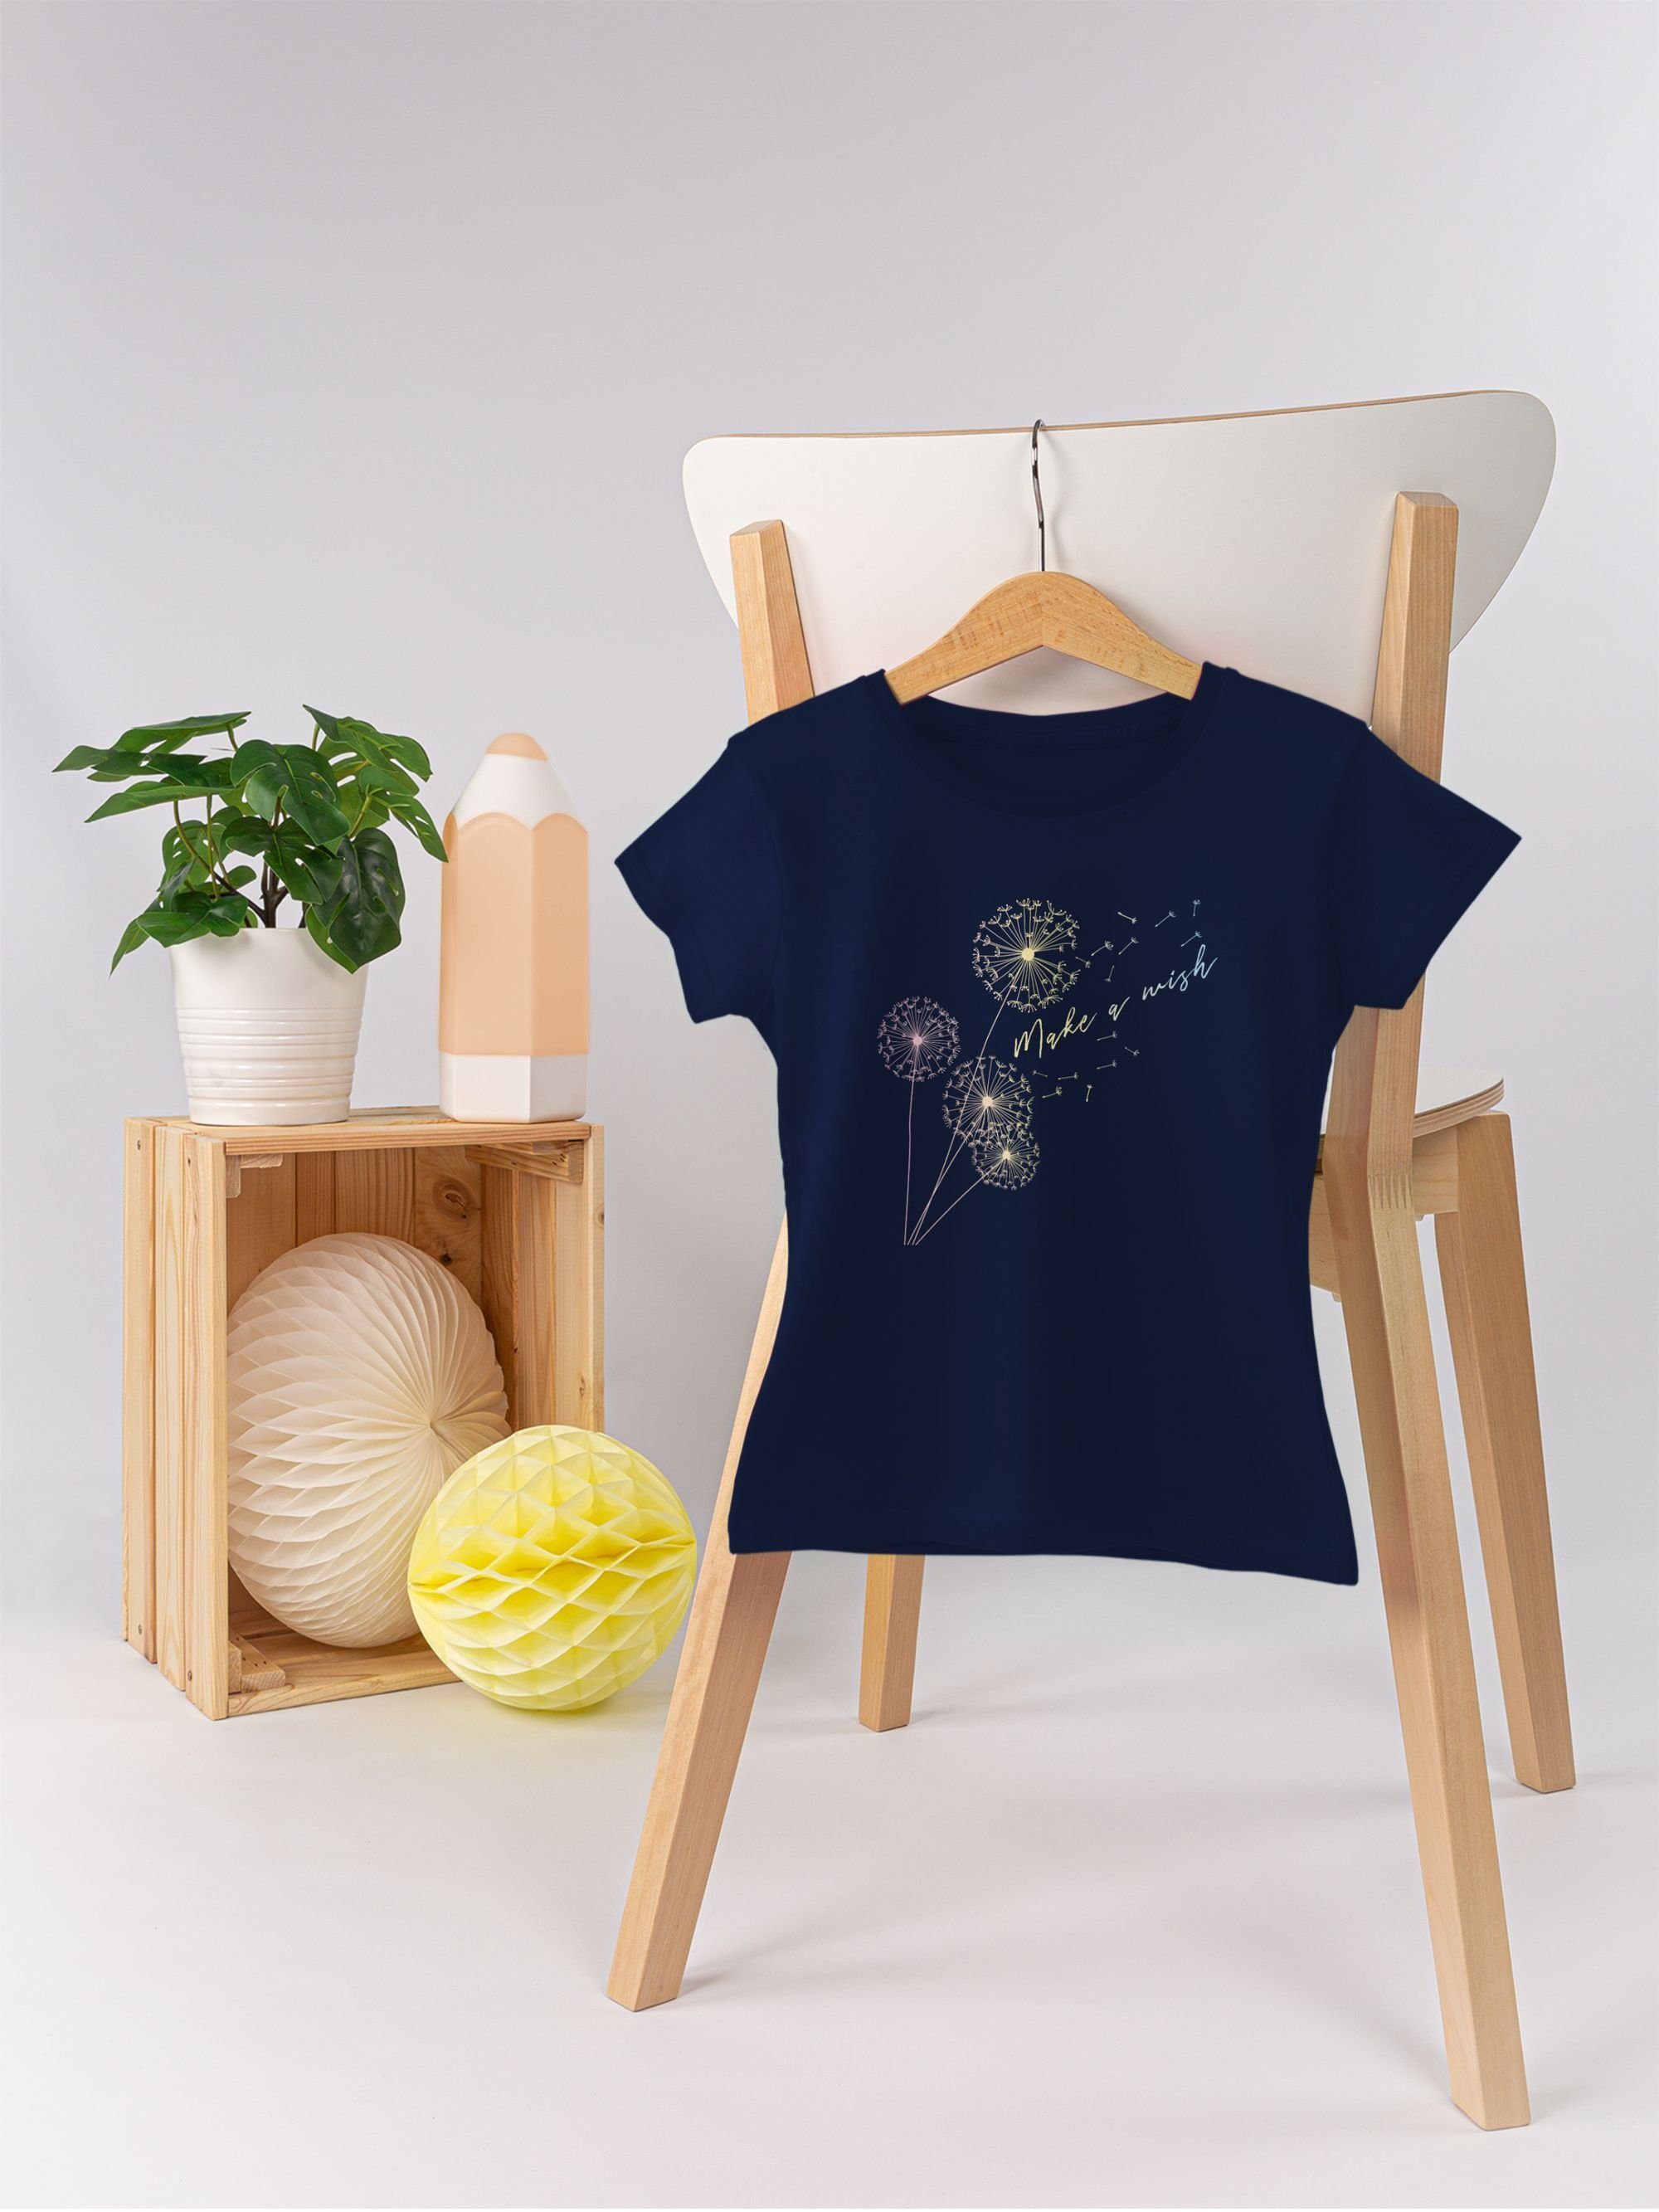 Flower Shirtracer Pusteblume und Dunkelblau Kinderkleidung Co 3 T-Shirt